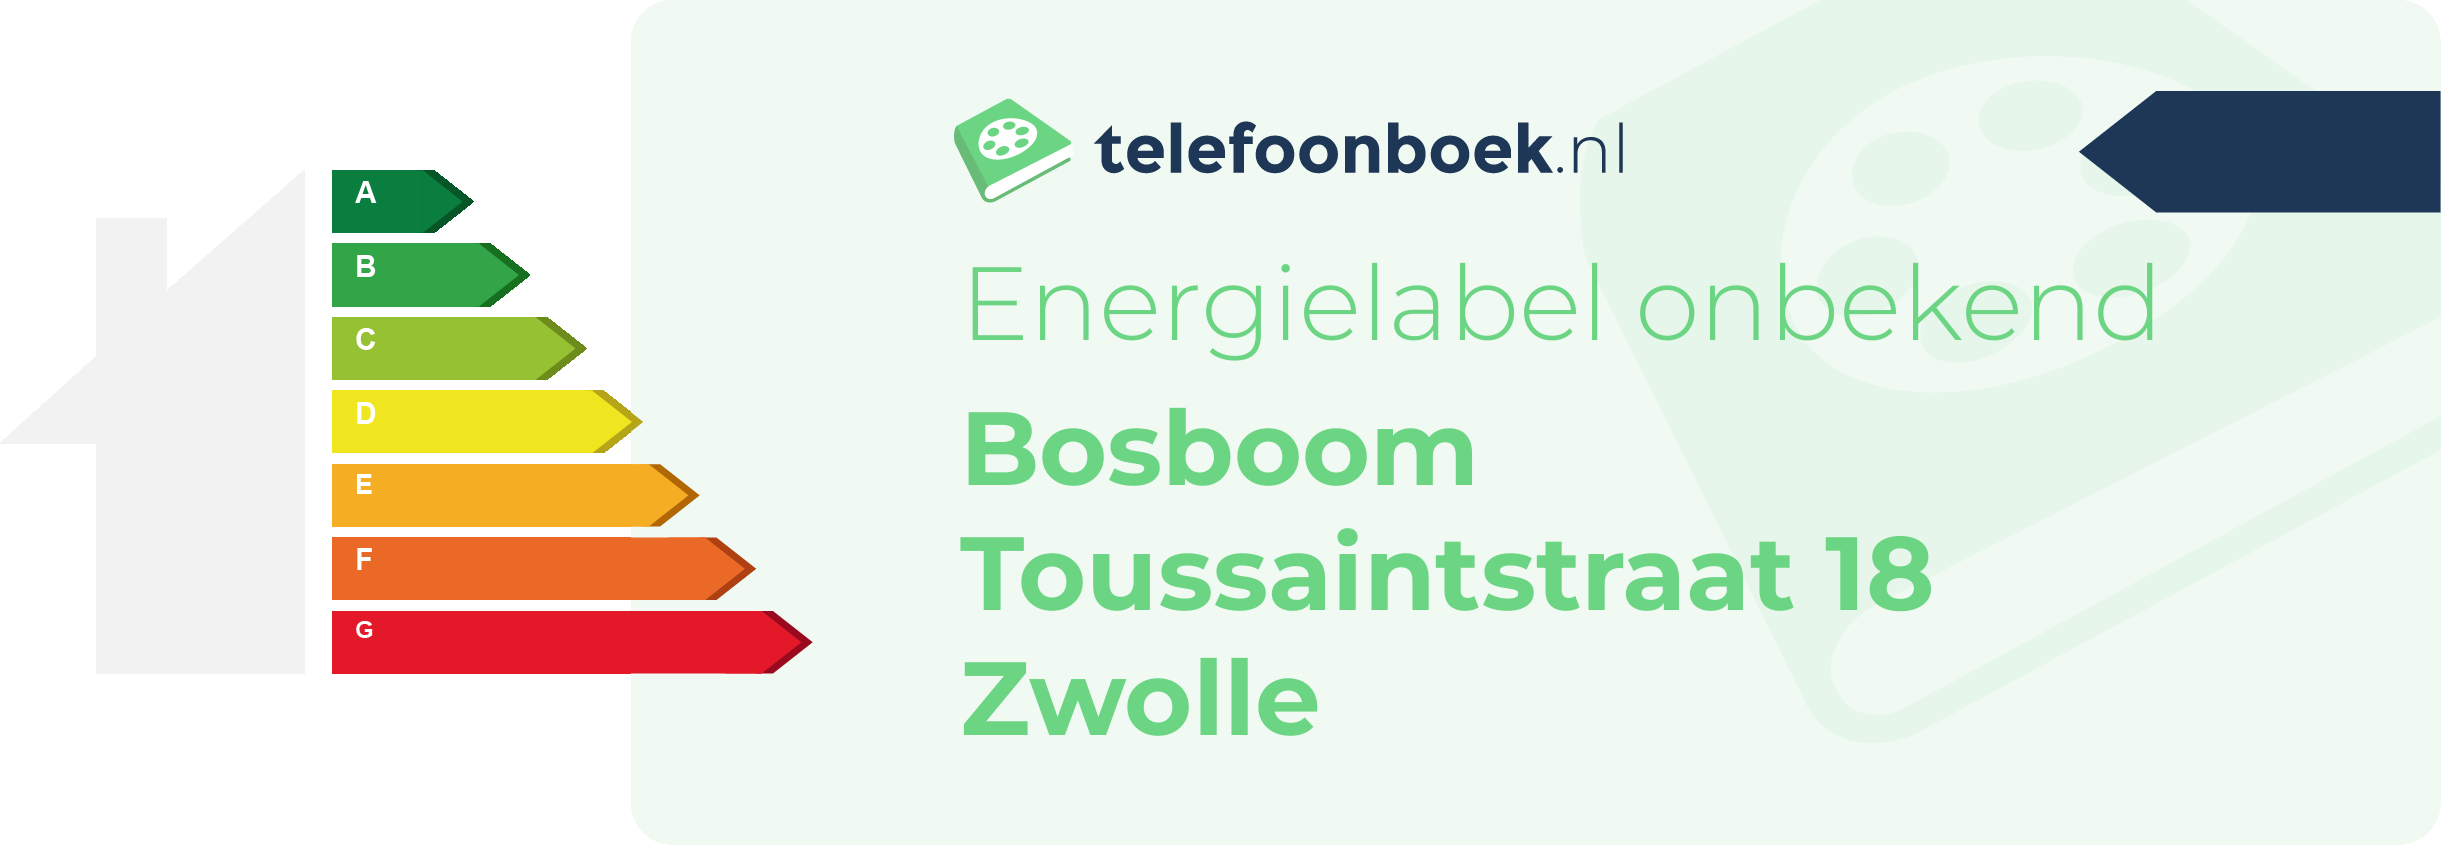 Energielabel Bosboom Toussaintstraat 18 Zwolle